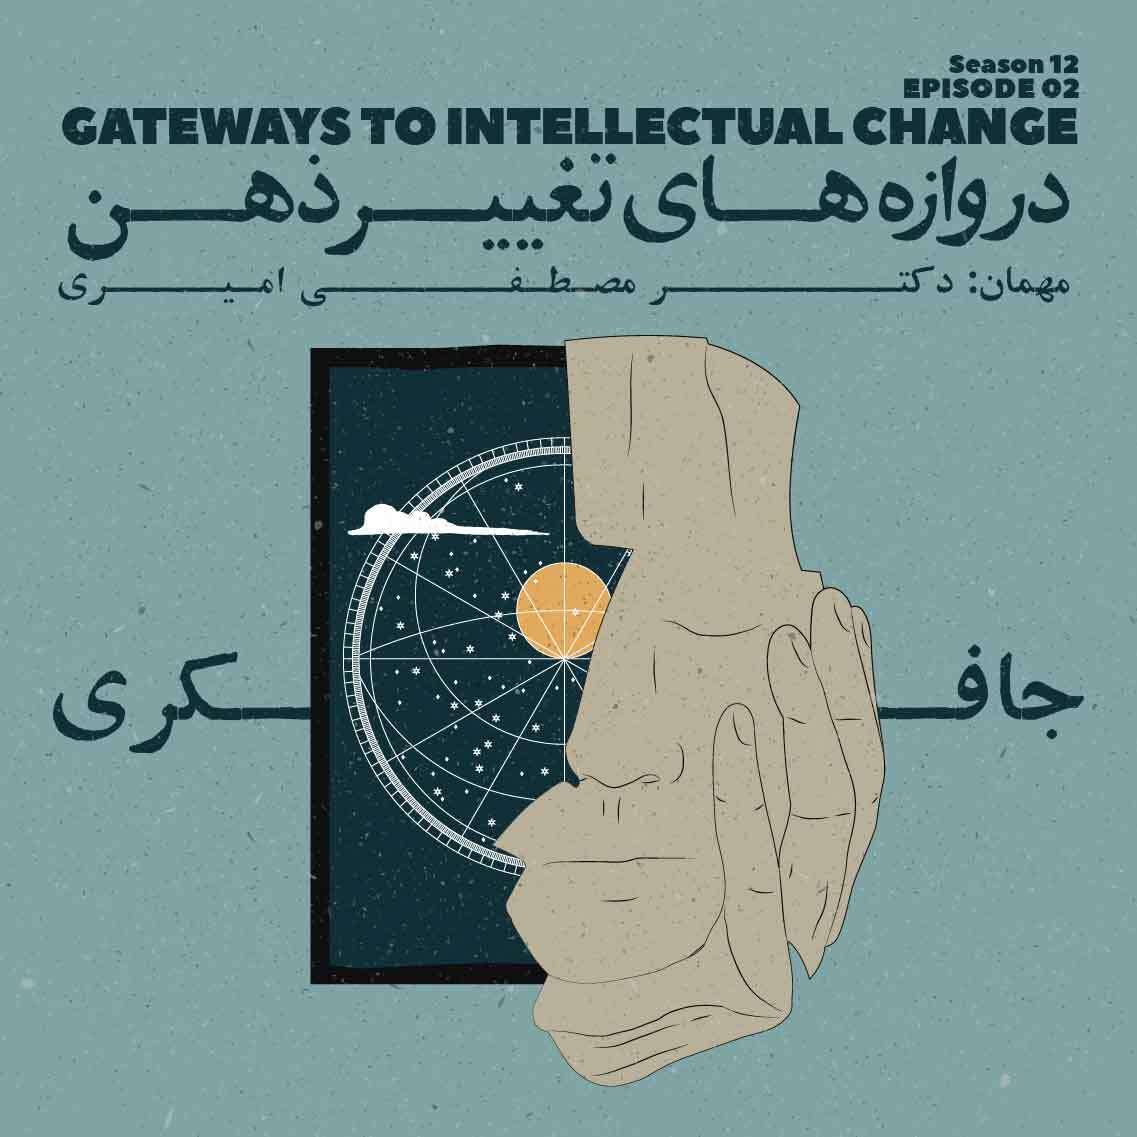 Episode 02 - Gateways to Intellectual Change (دروازه های تغییر ذهن)